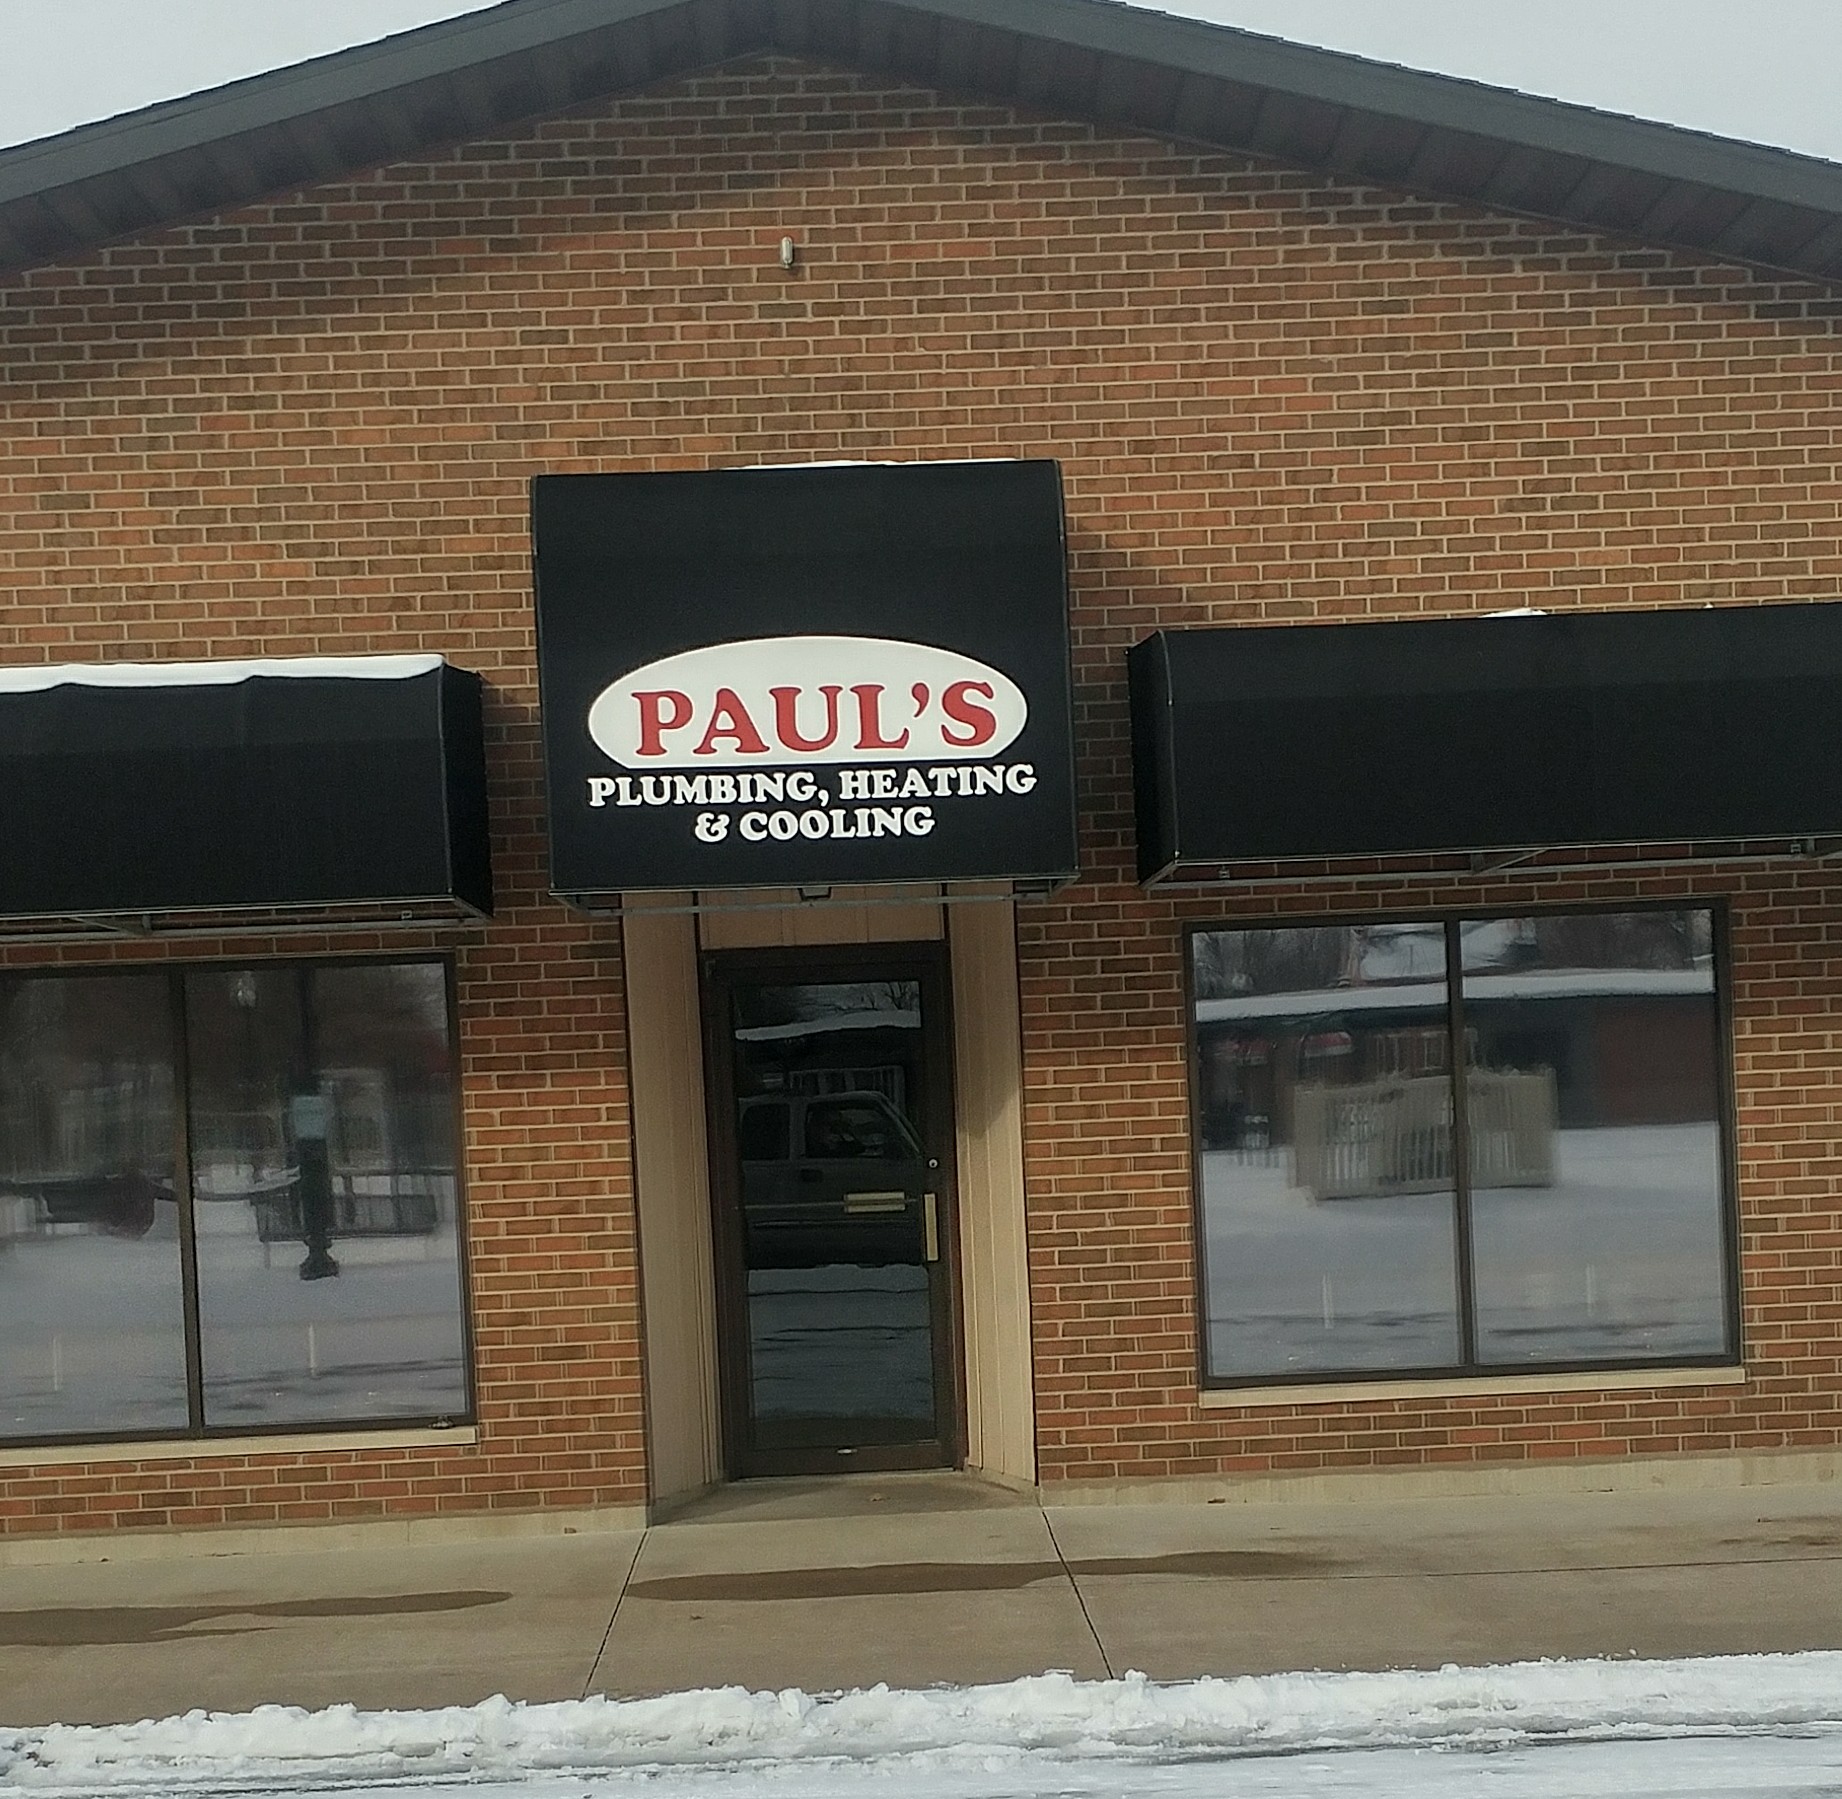 Paul's Plumbing, Heating, & Cooling 410 Avenue E, West Point Iowa 52656